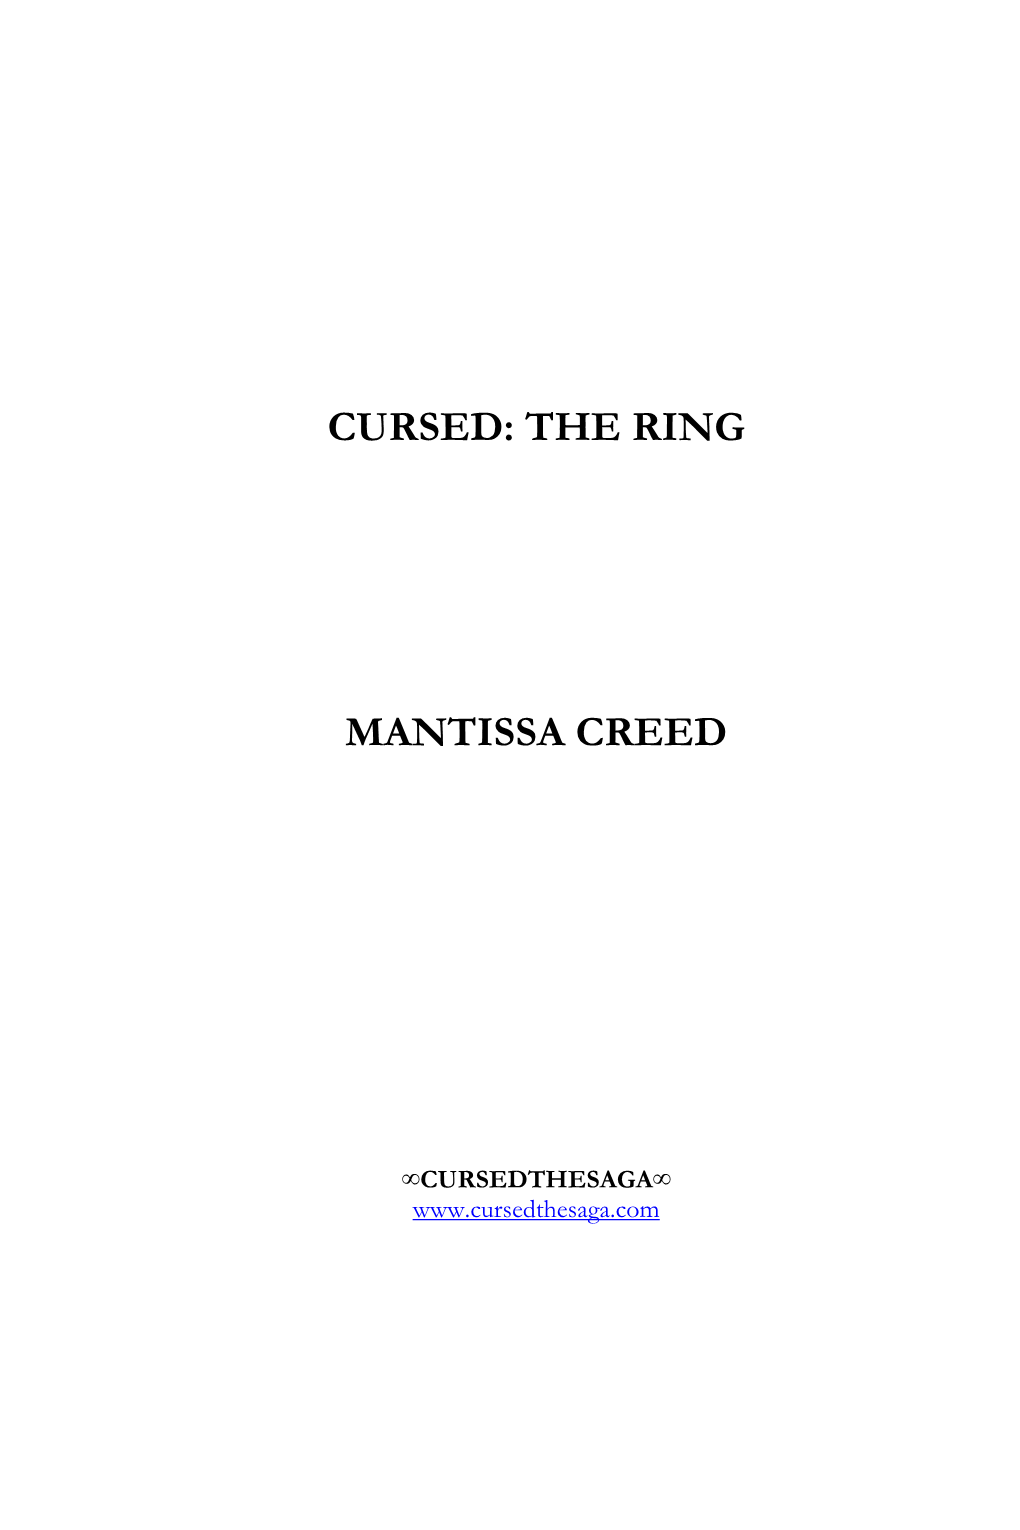 Cursed: the Ring Mantissa Creed